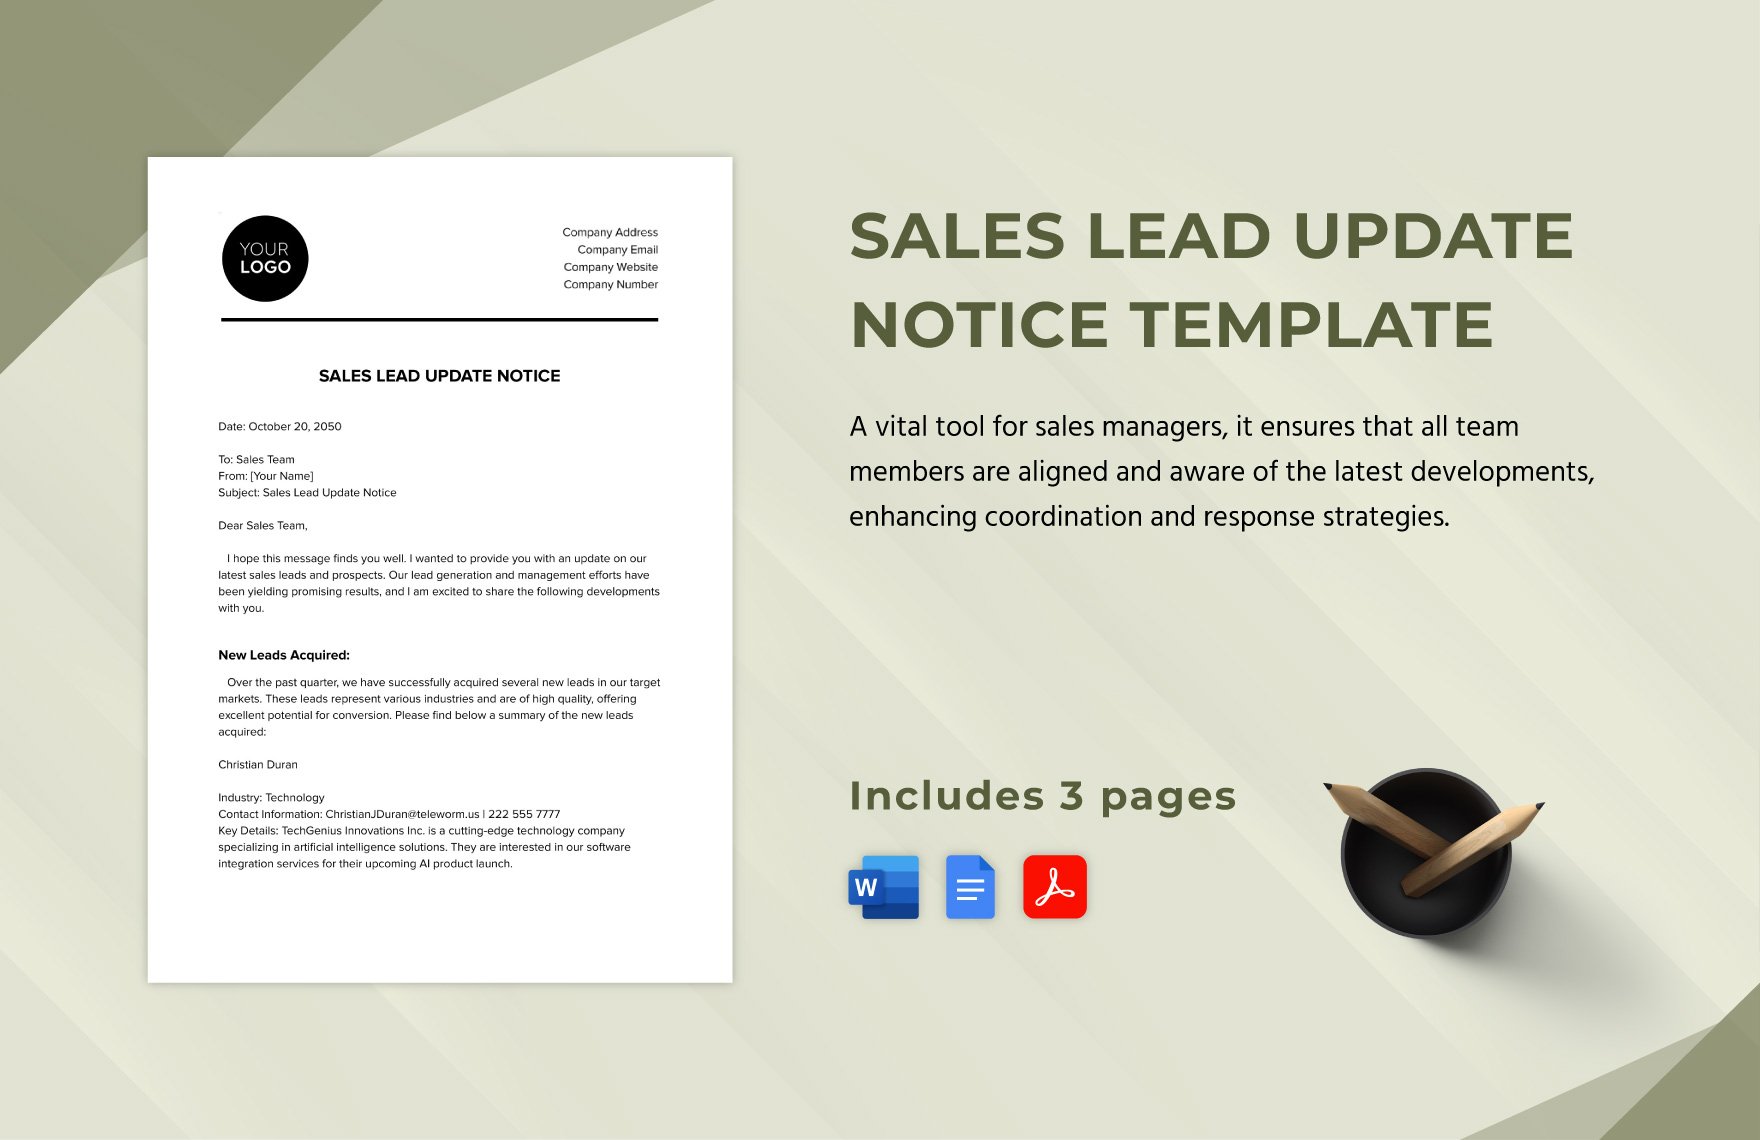 Sales Lead Update Notice Template in Word, Google Docs, PDF